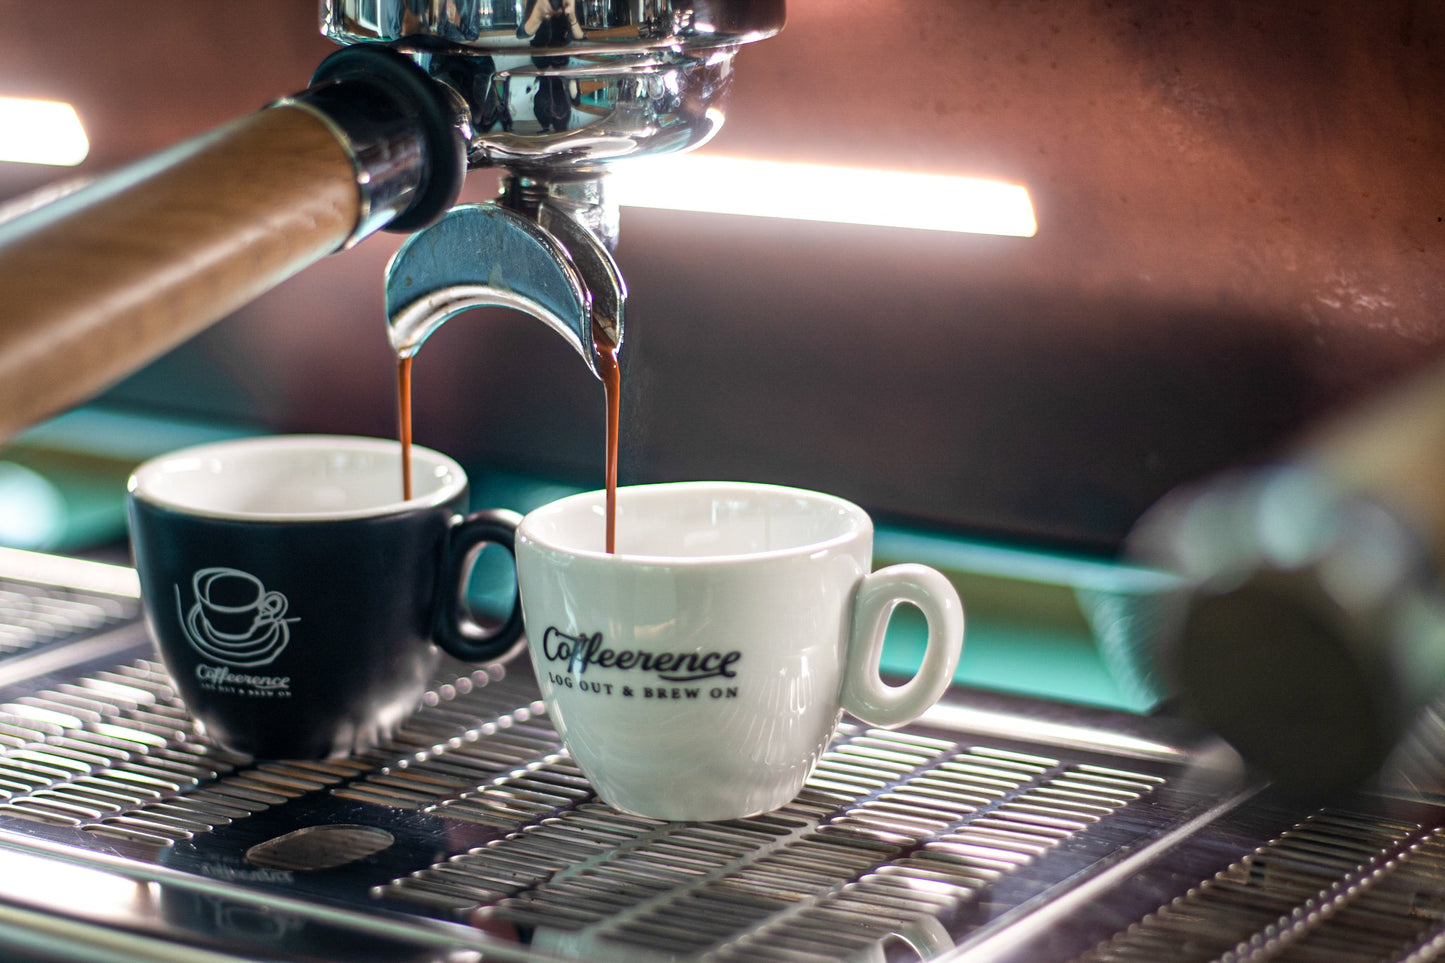 Kaffeebohnen, French Roast, 1000g - Coffeerence® "Motivator"